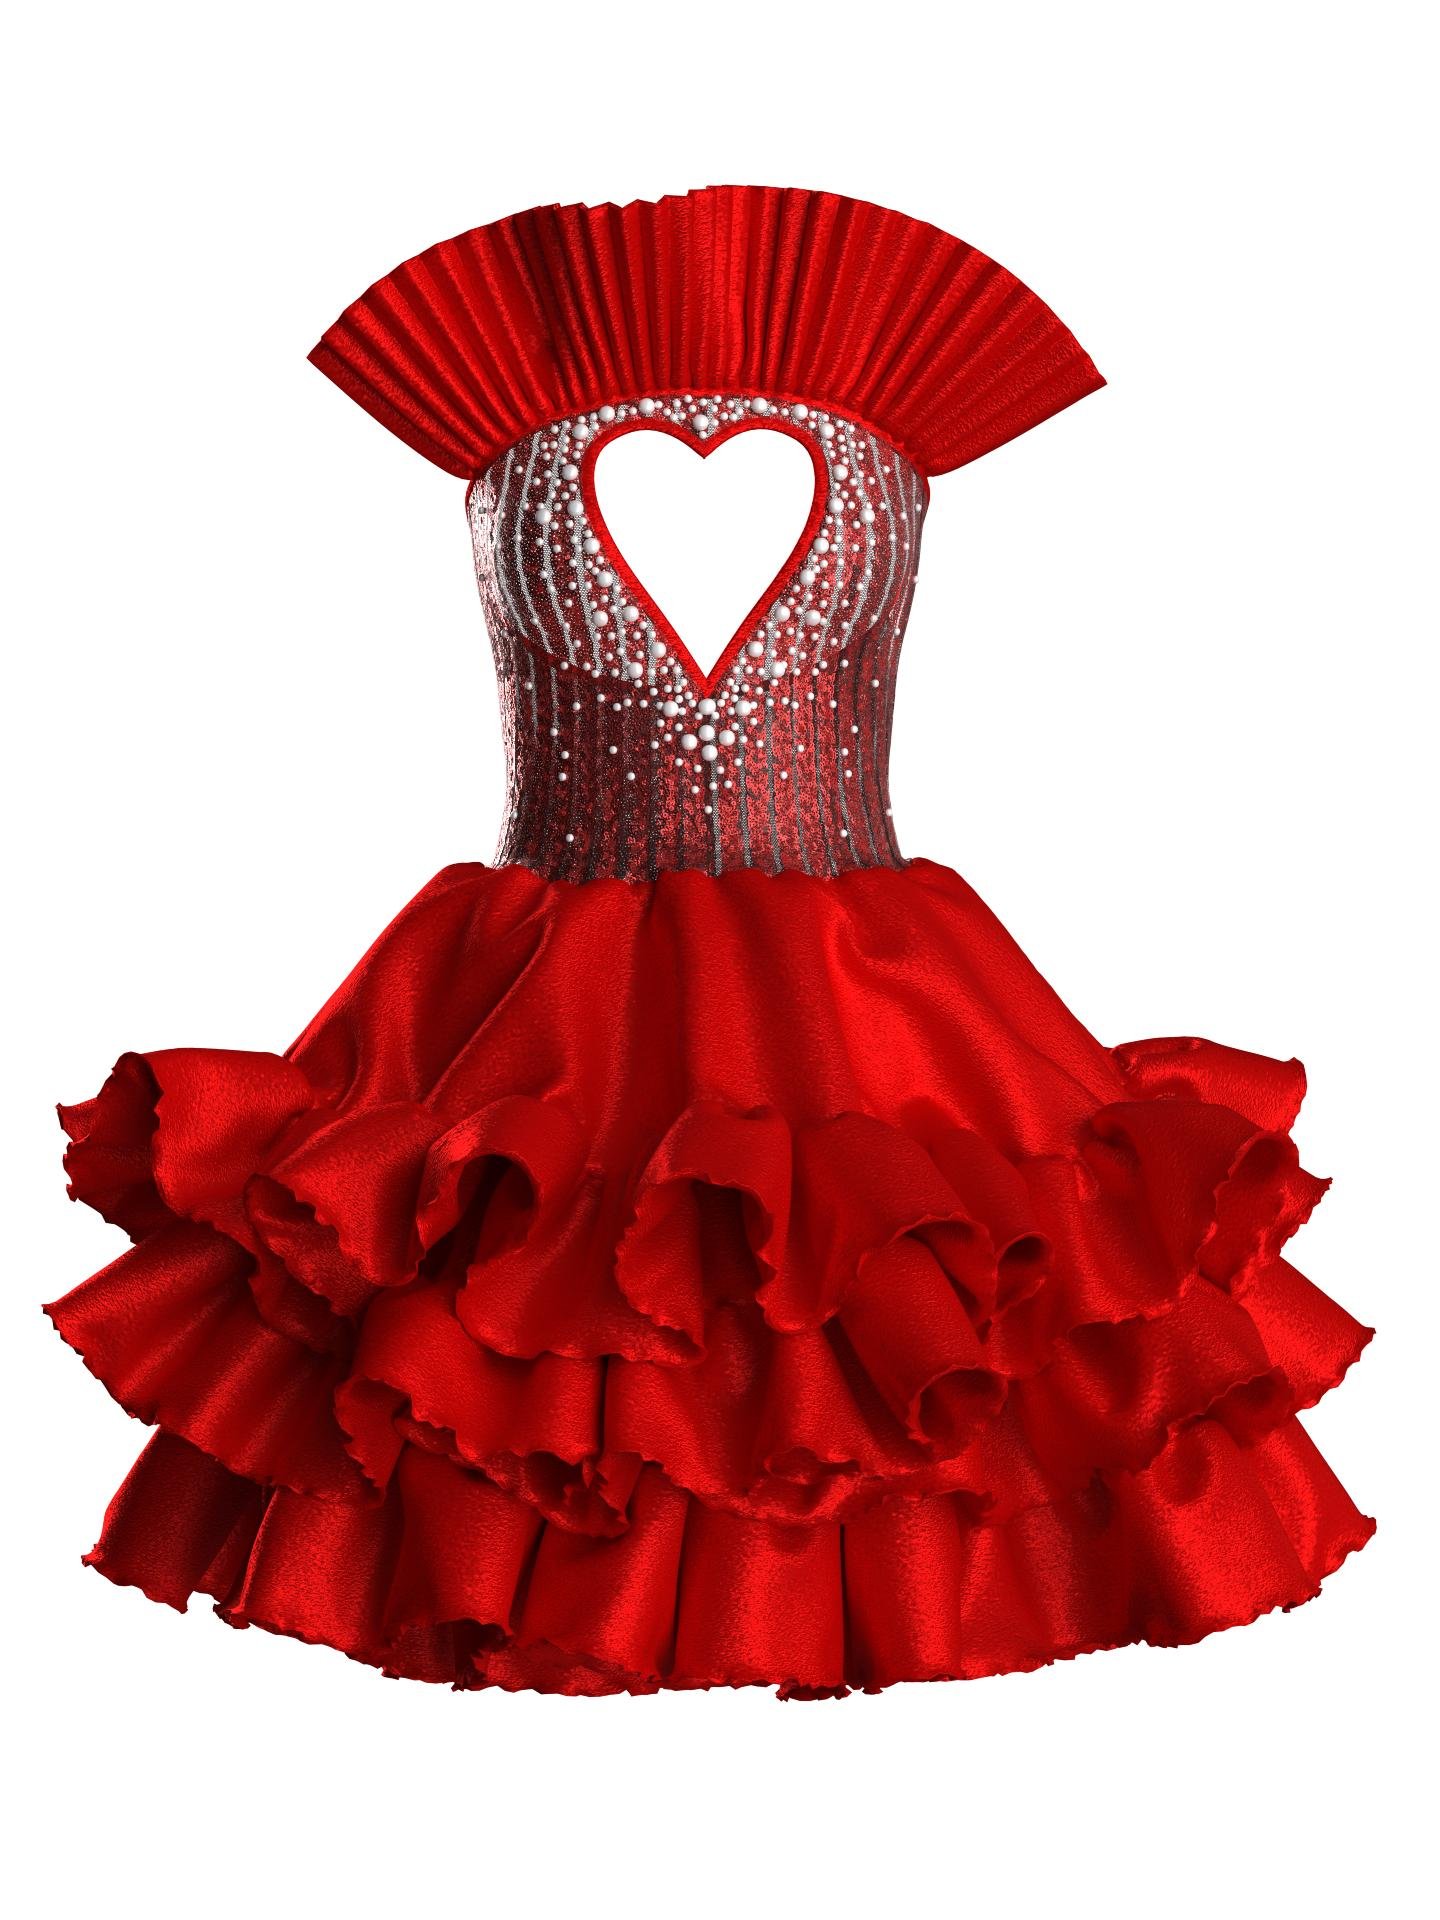 Red heart dress by DELARAM SANJANI